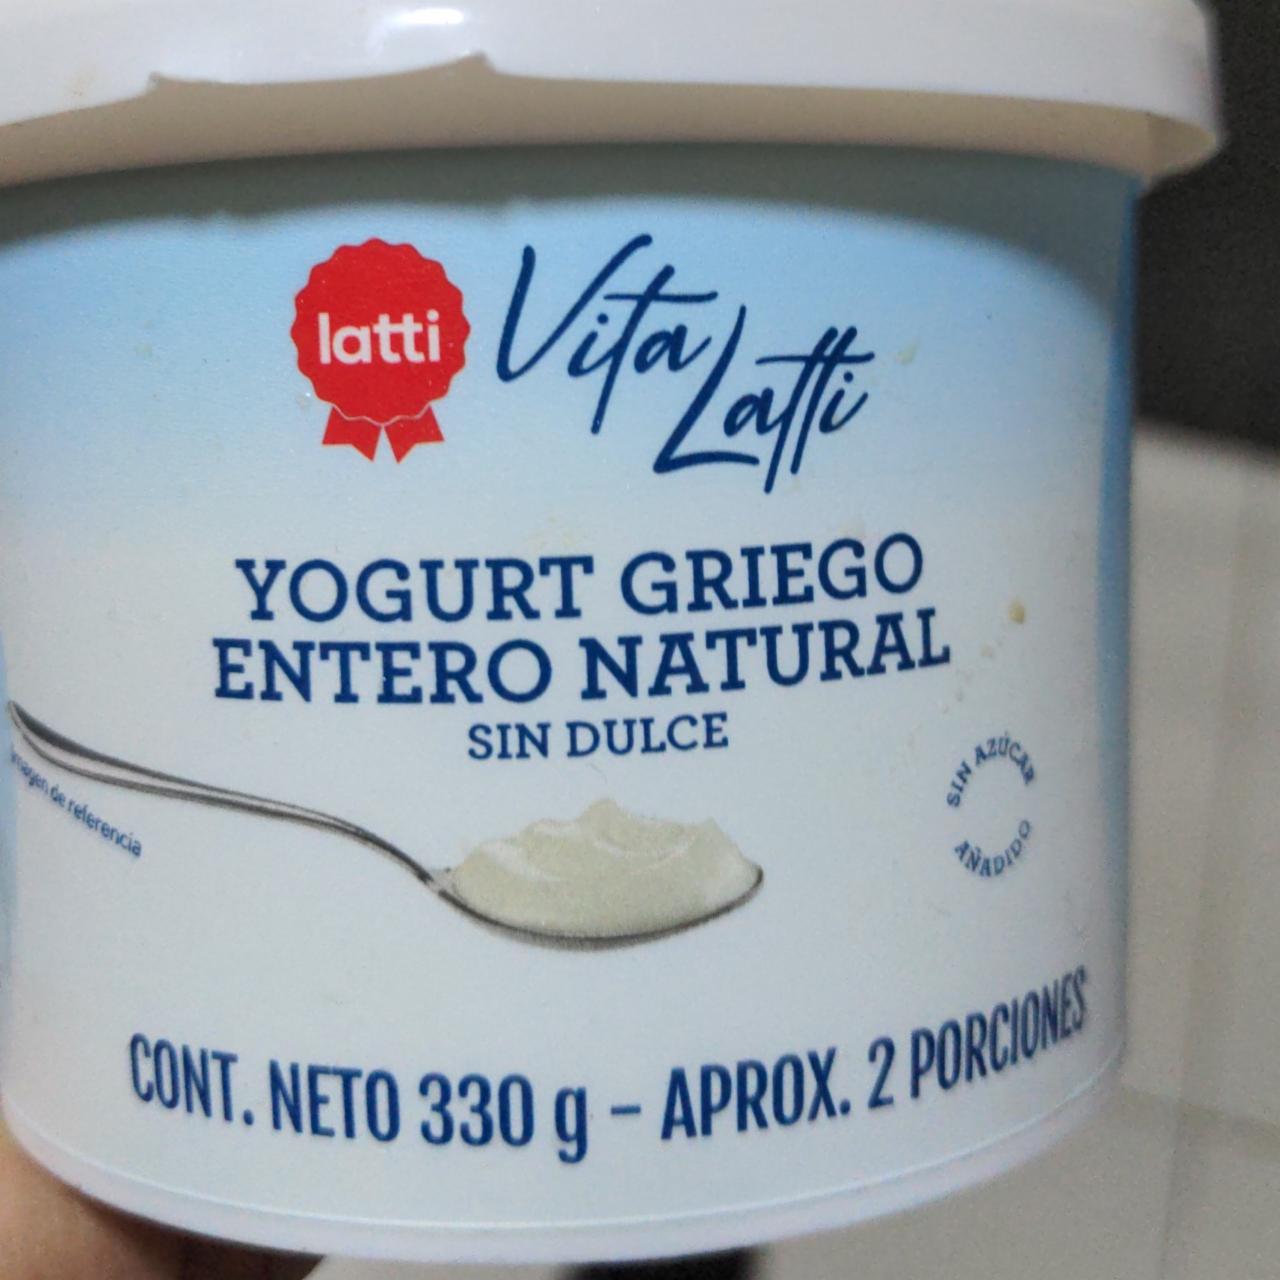 Fotografie - Yogurt griego entero natural sin dulce Latti